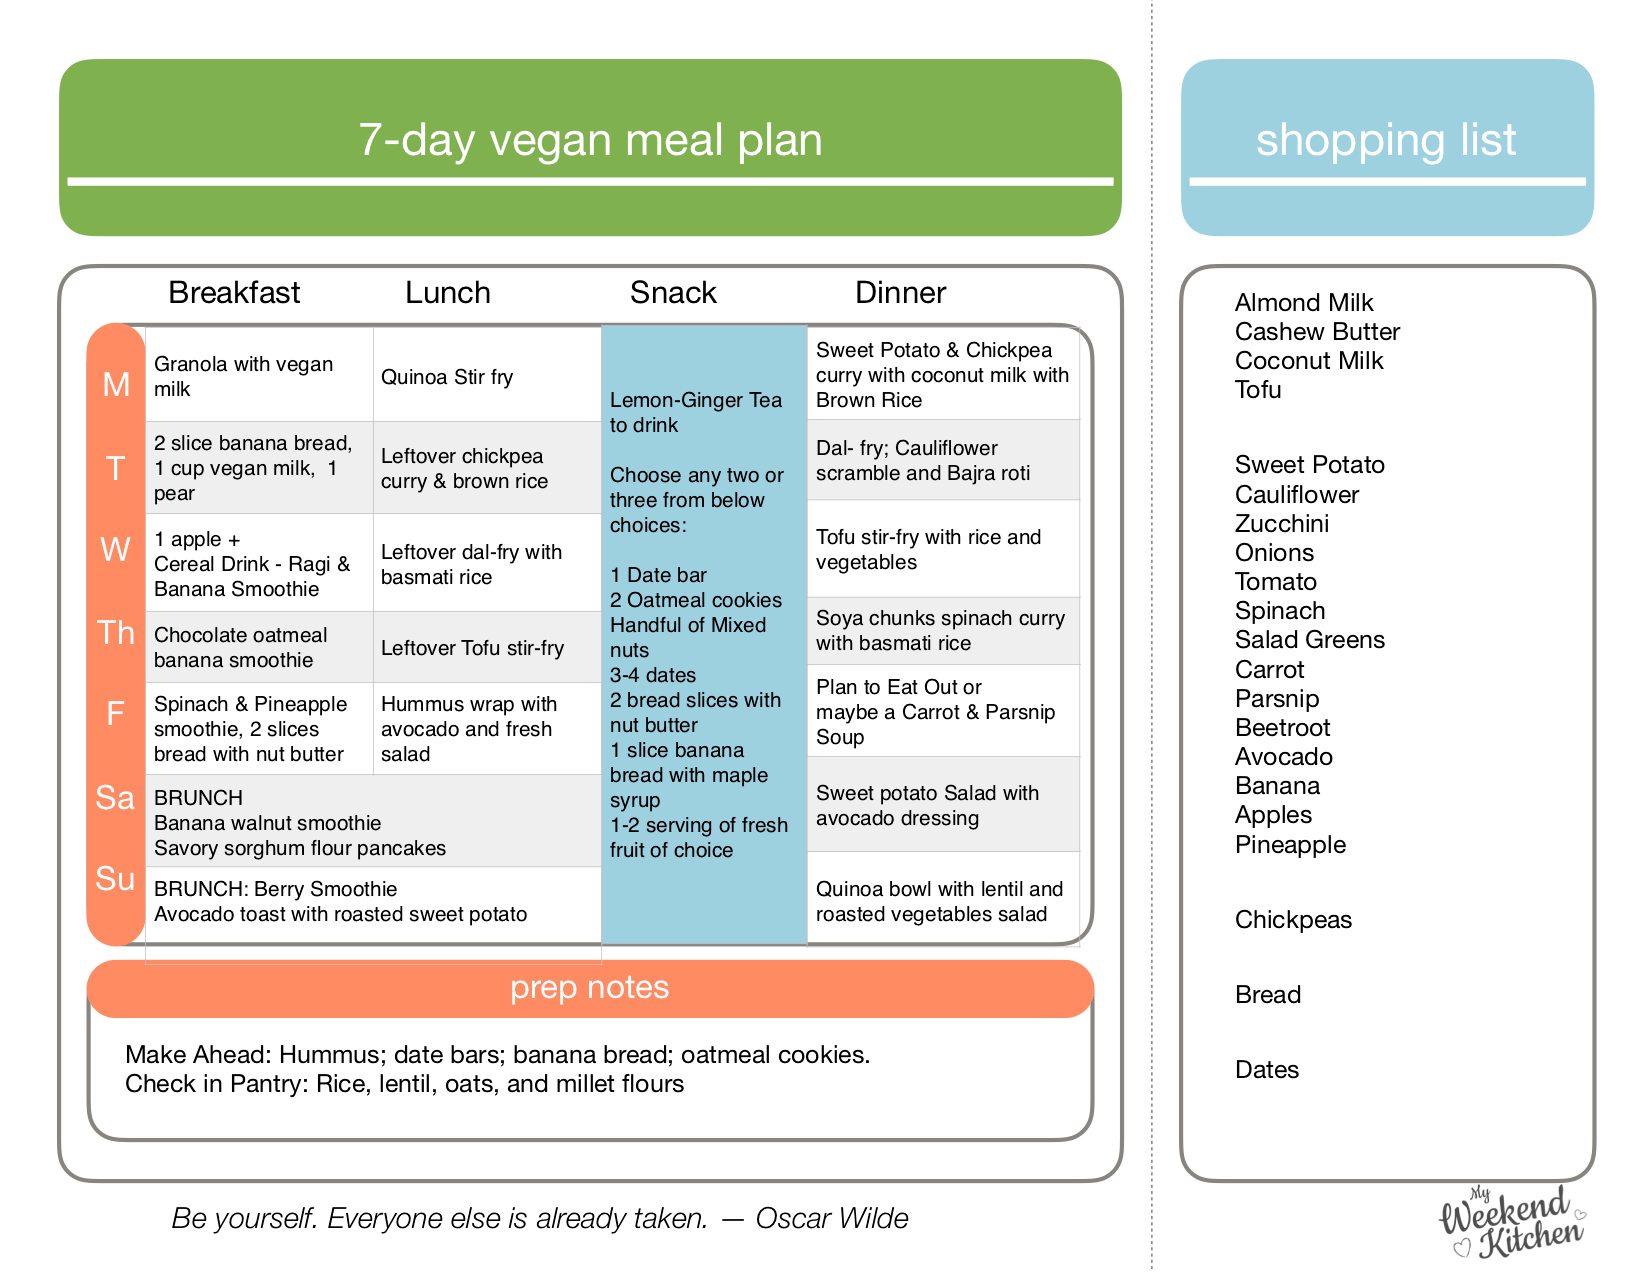 7 day Vegan Meal Plan Feb My Weekend Kitchen